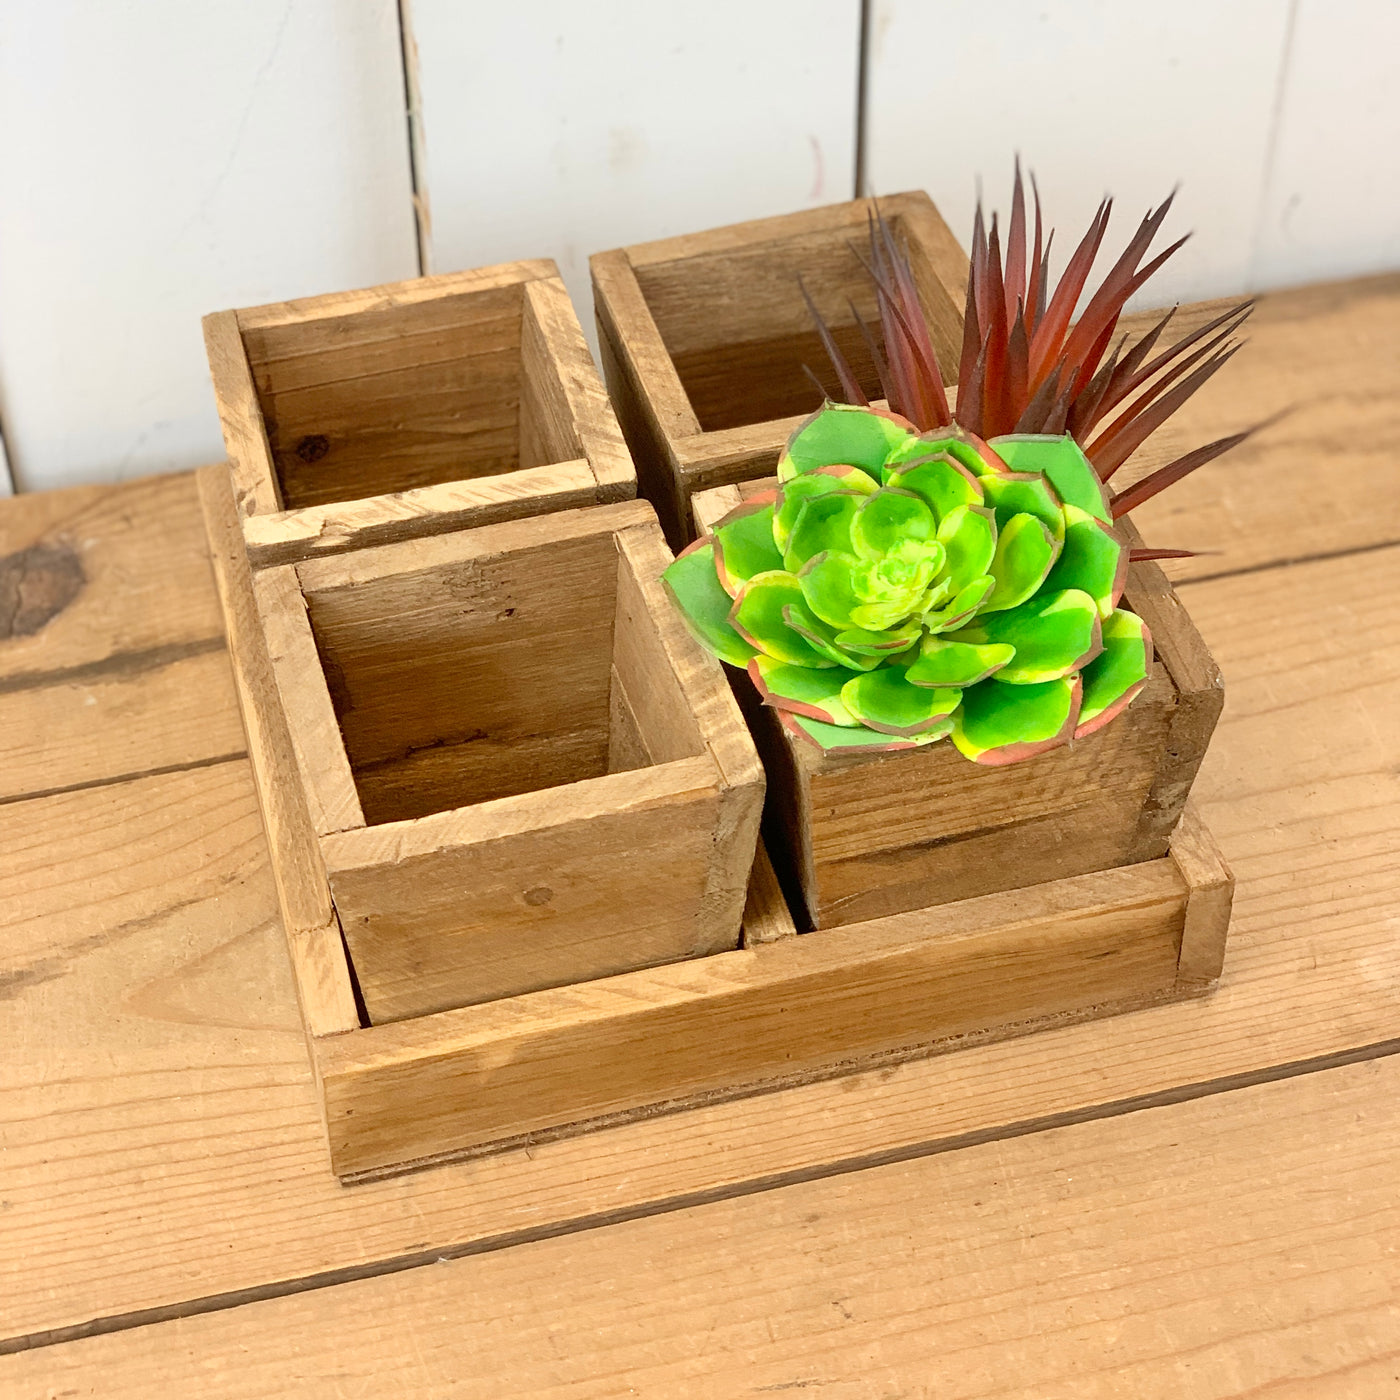 Wooden Planters - 4 Boxes